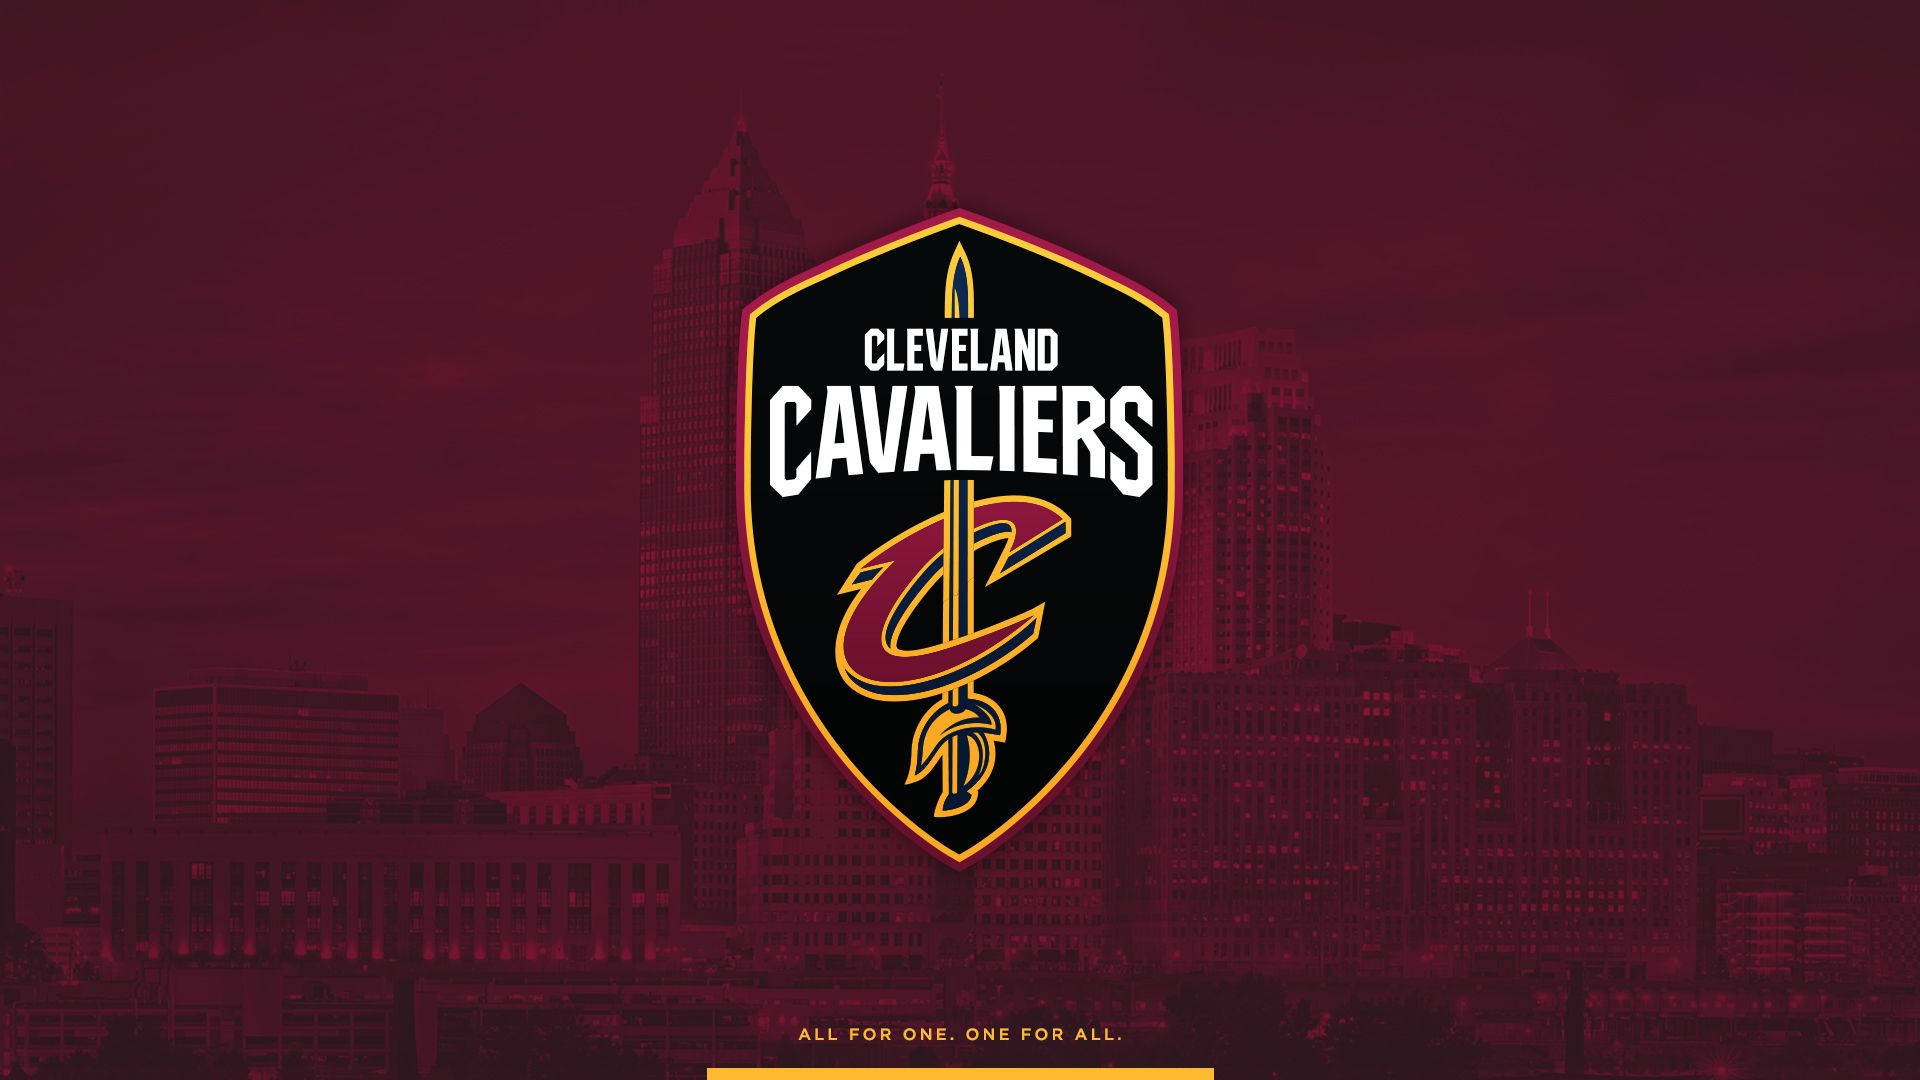 Cleveland Cavaliers Monochromatic Maroon Background